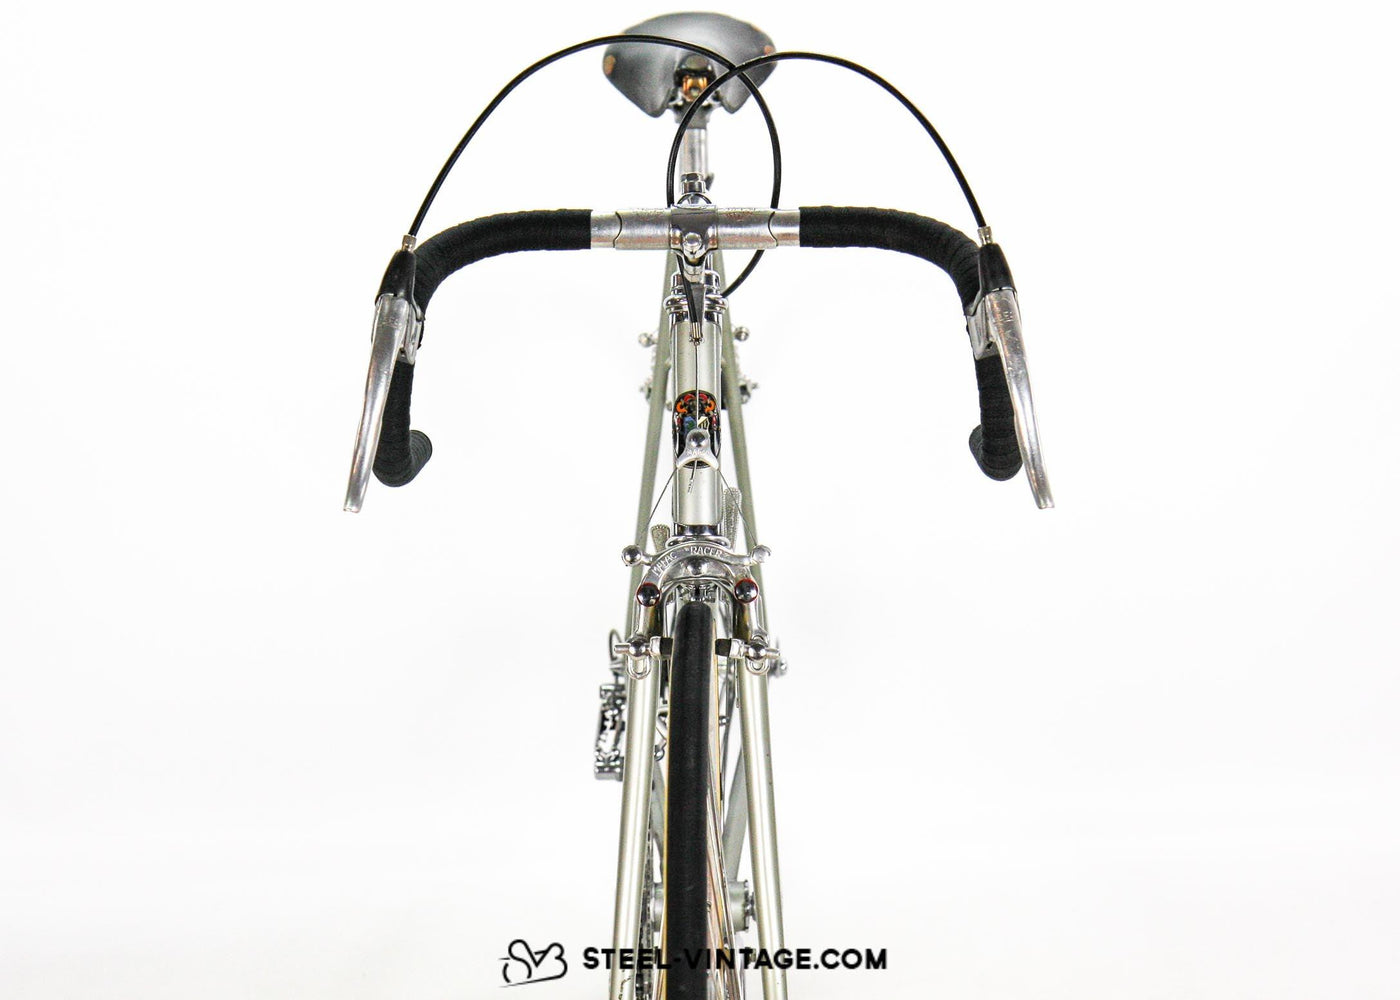 Cinelli Mod. S.C. Supercorsa Classic Road Bike 1960s - Steel Vintage Bikes